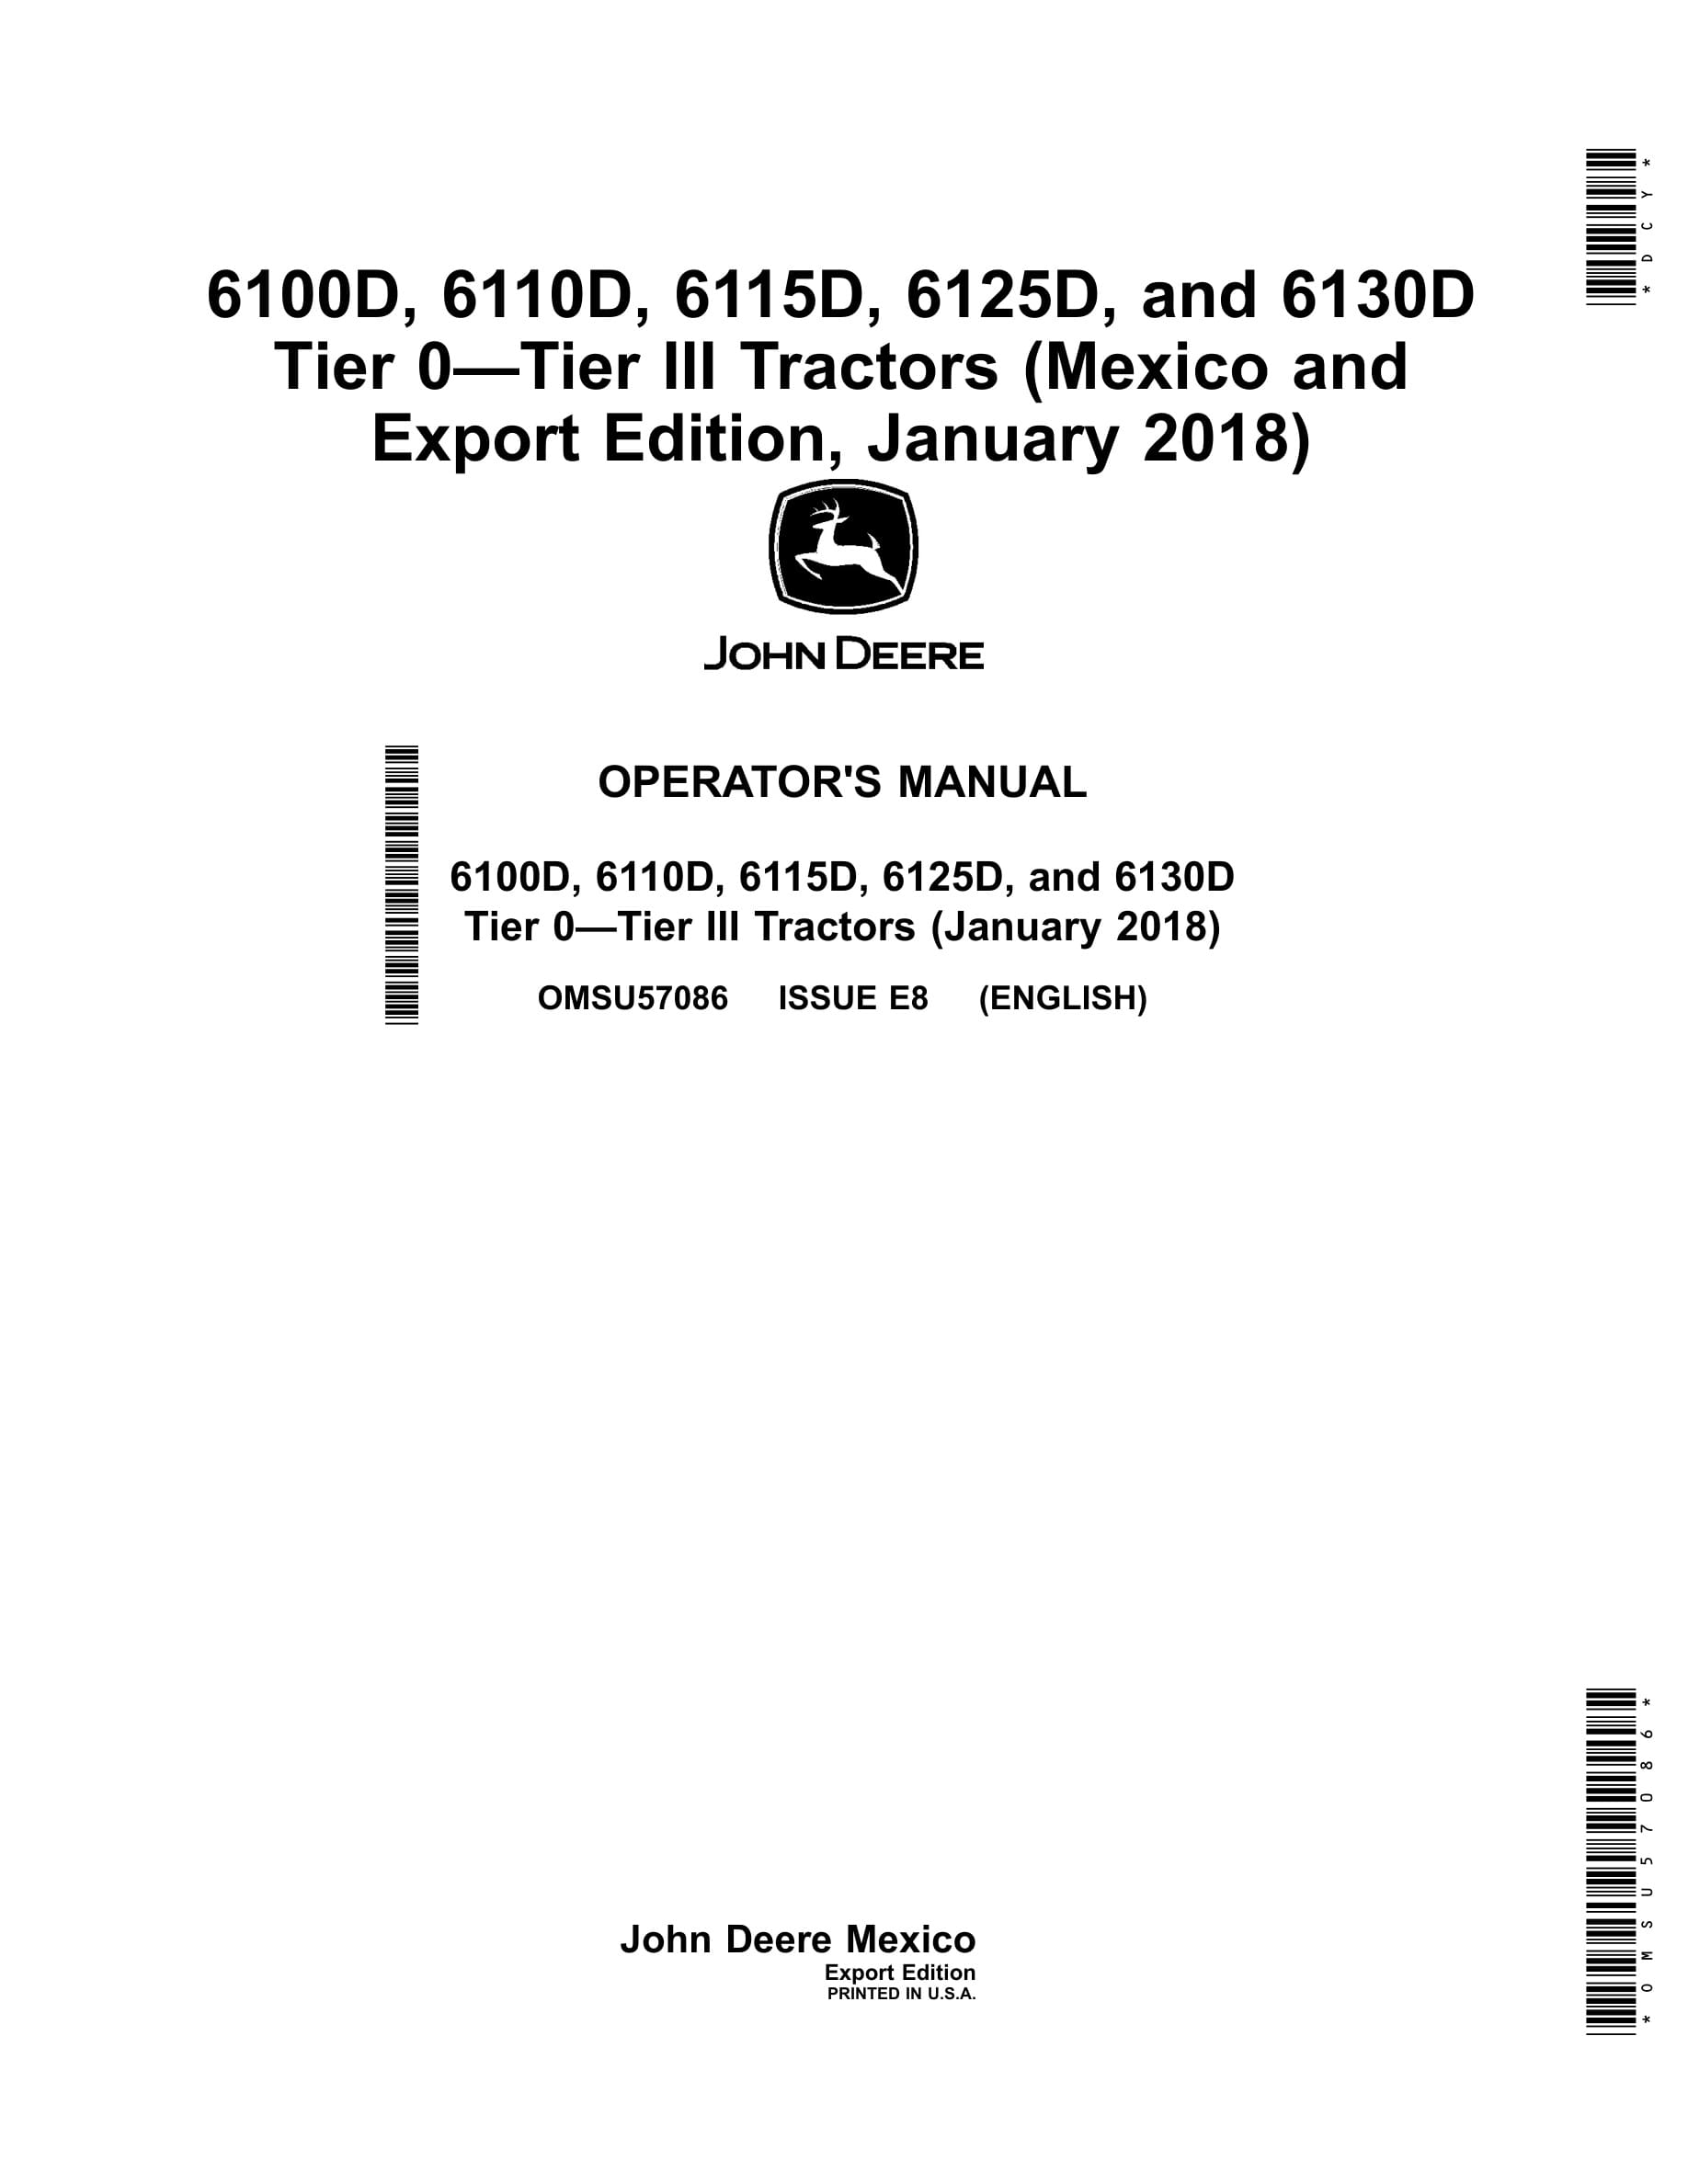 John Deere 6100d, 6110d, 6115d, 6125d, And 6130d Tier 0-tier Iii Tractors Operator Manuals OMSU57086-1